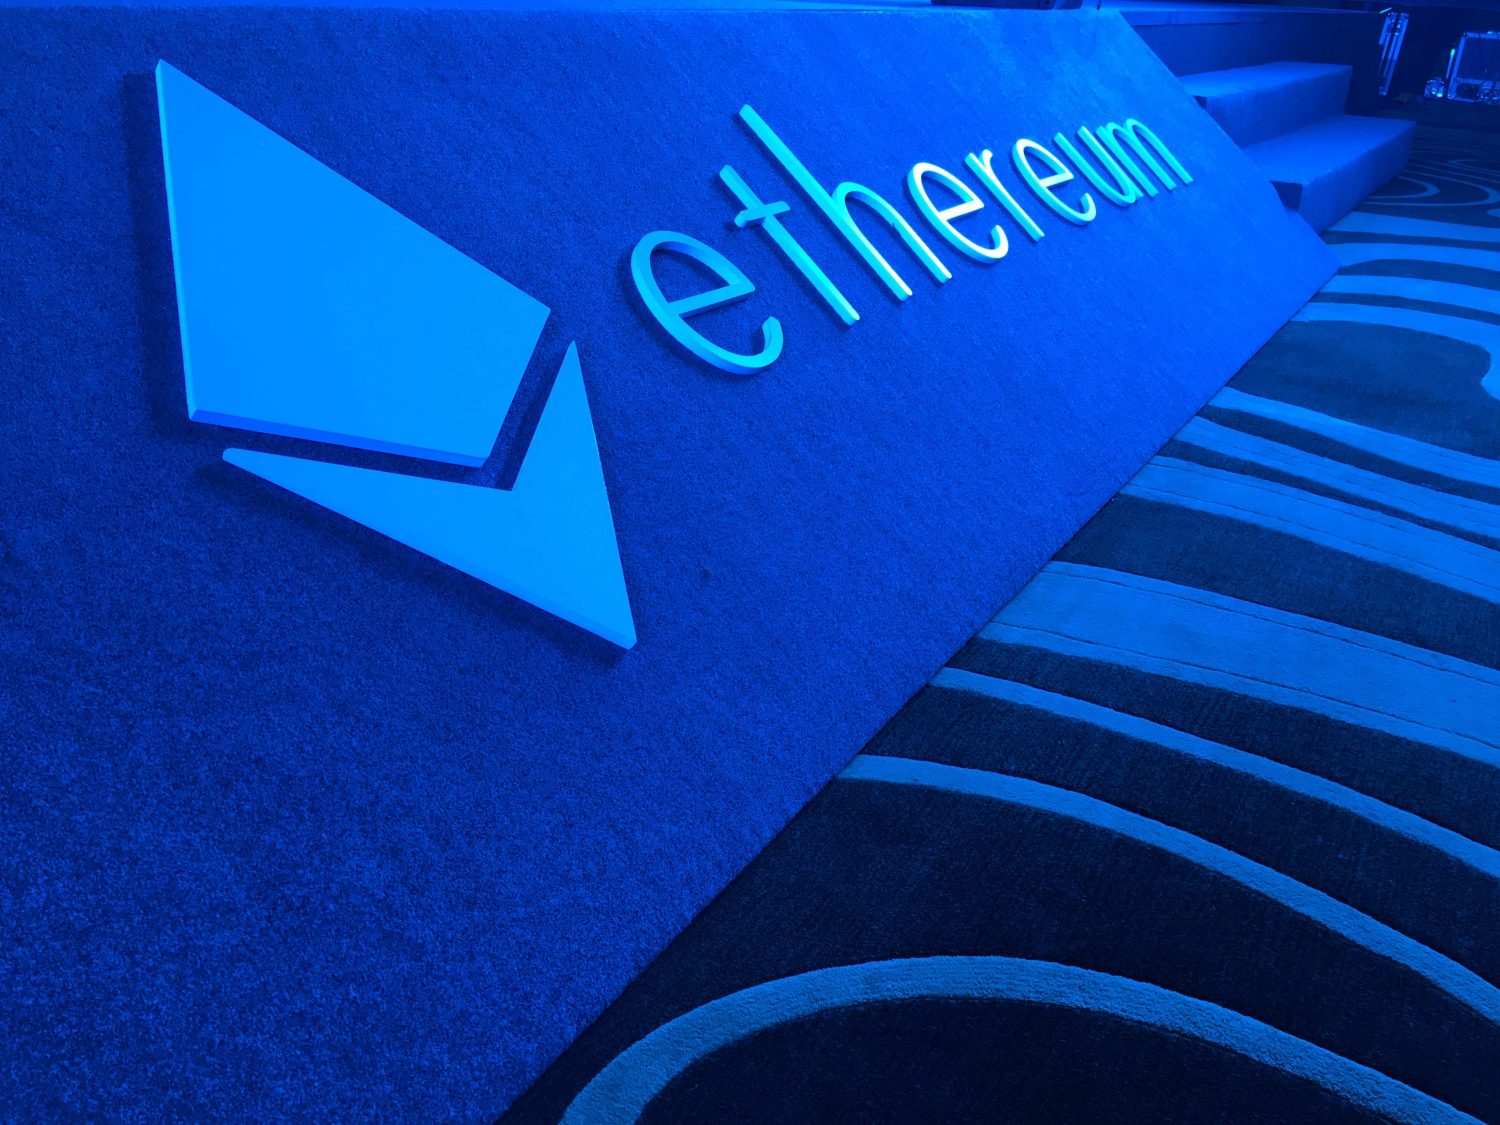 Enterprise-ethereum-alliance-launches-testing-ground-for-blockchain-interoperability